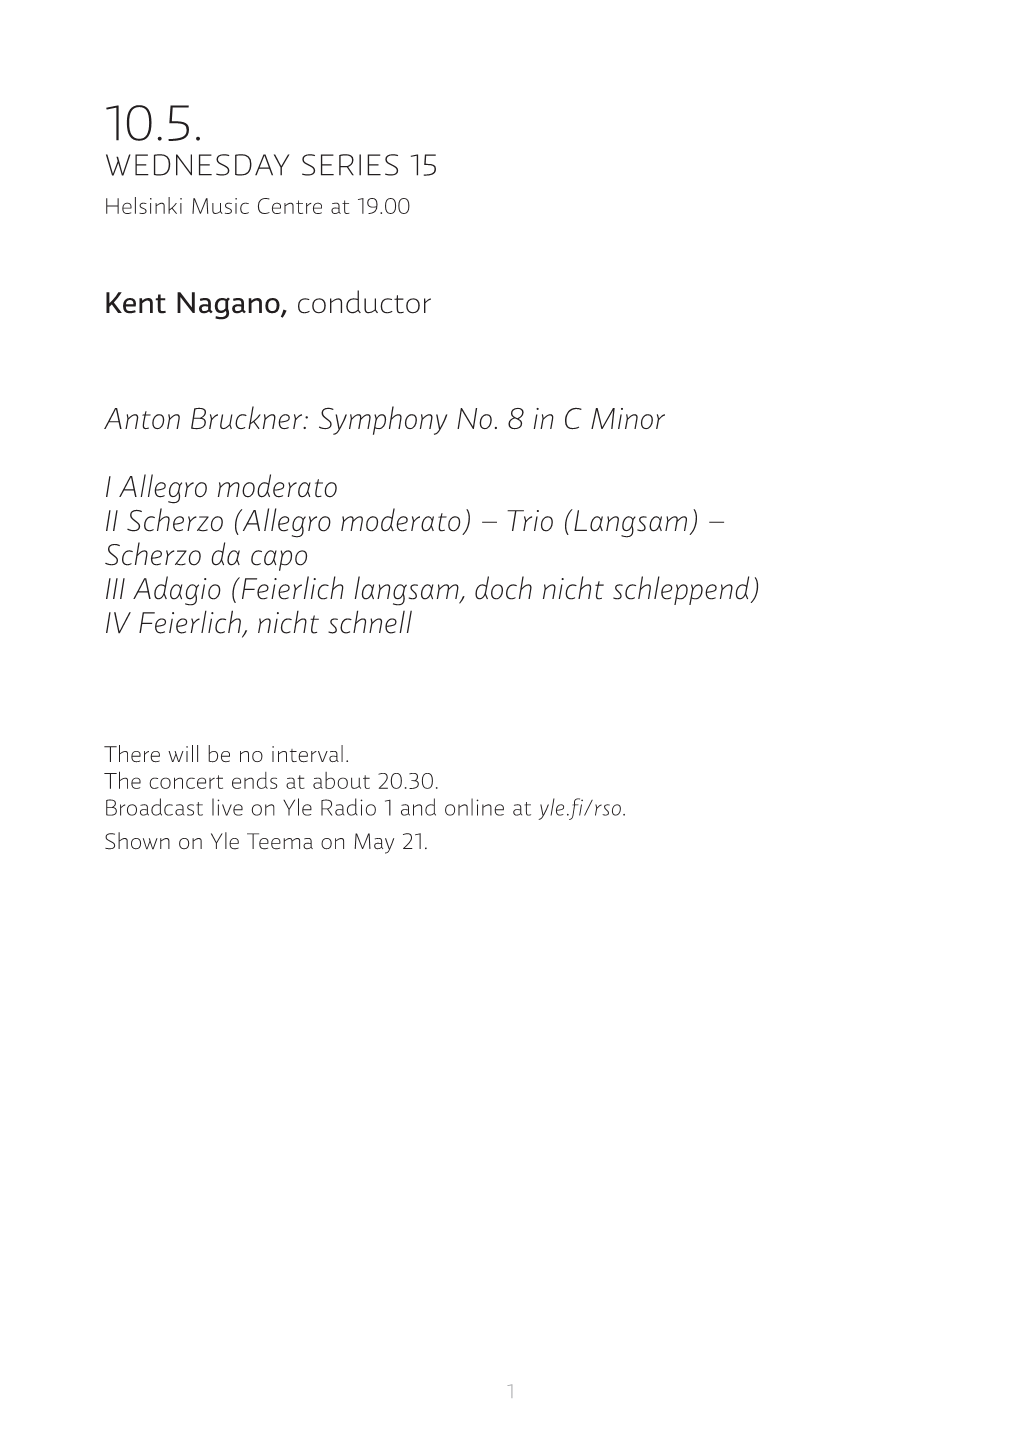 WEDNESDAY SERIES 15 Kent Nagano, Conductor Anton